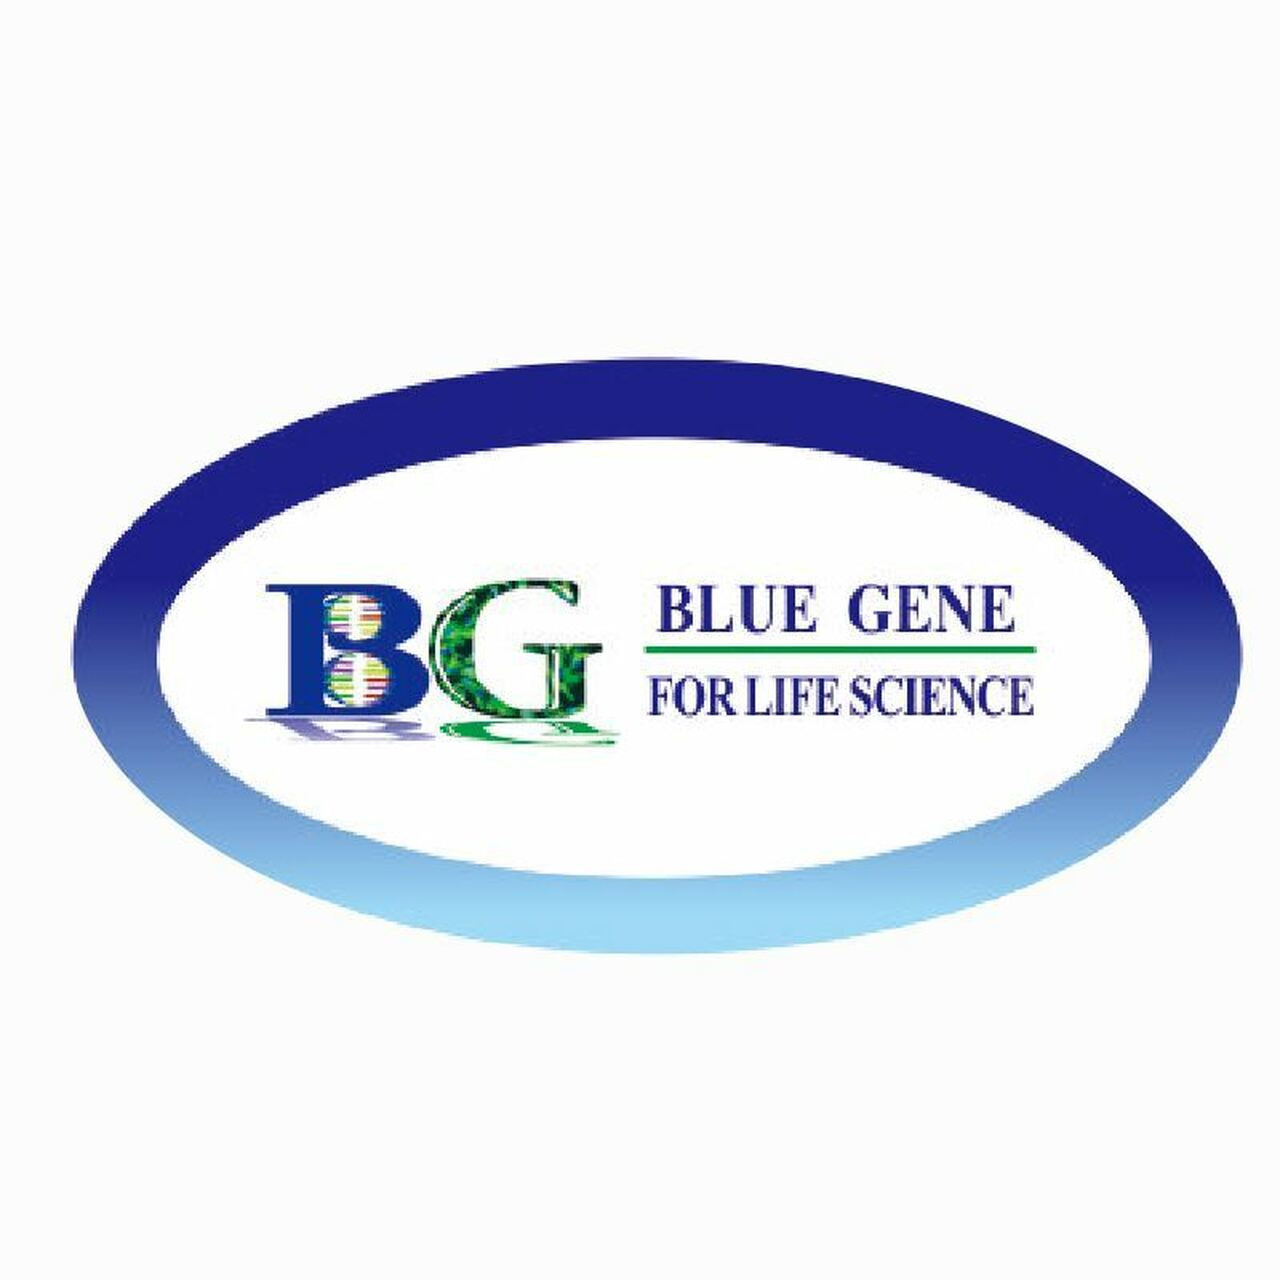 bluegene-serum--glucocorticoid-inducible-protein-kinase-elisa-kit